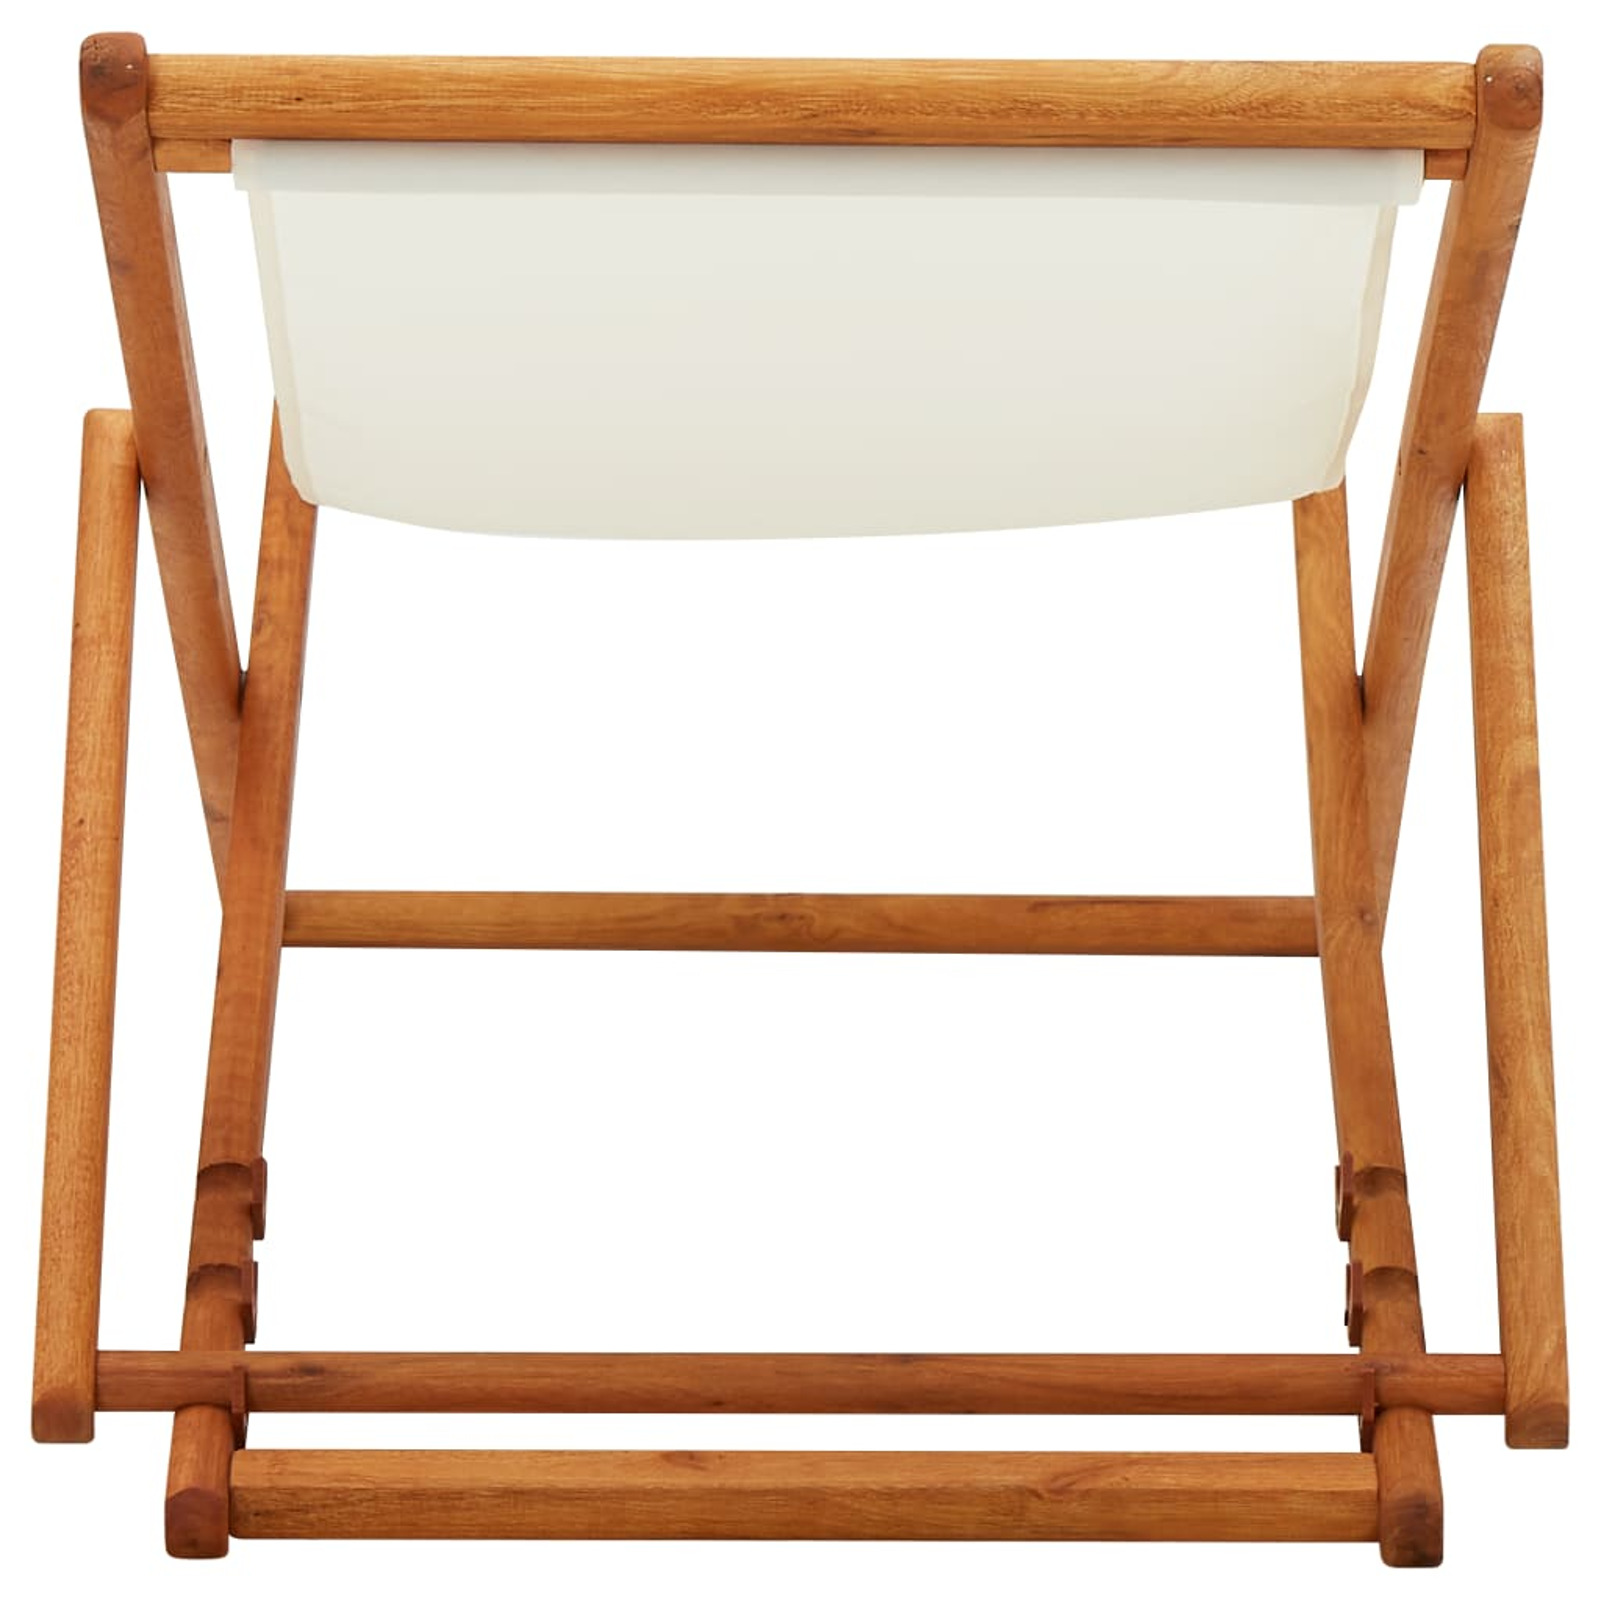 Suzicca Folding Beach Chair Eucalyptus Wood and Fabric White - image 4 of 6